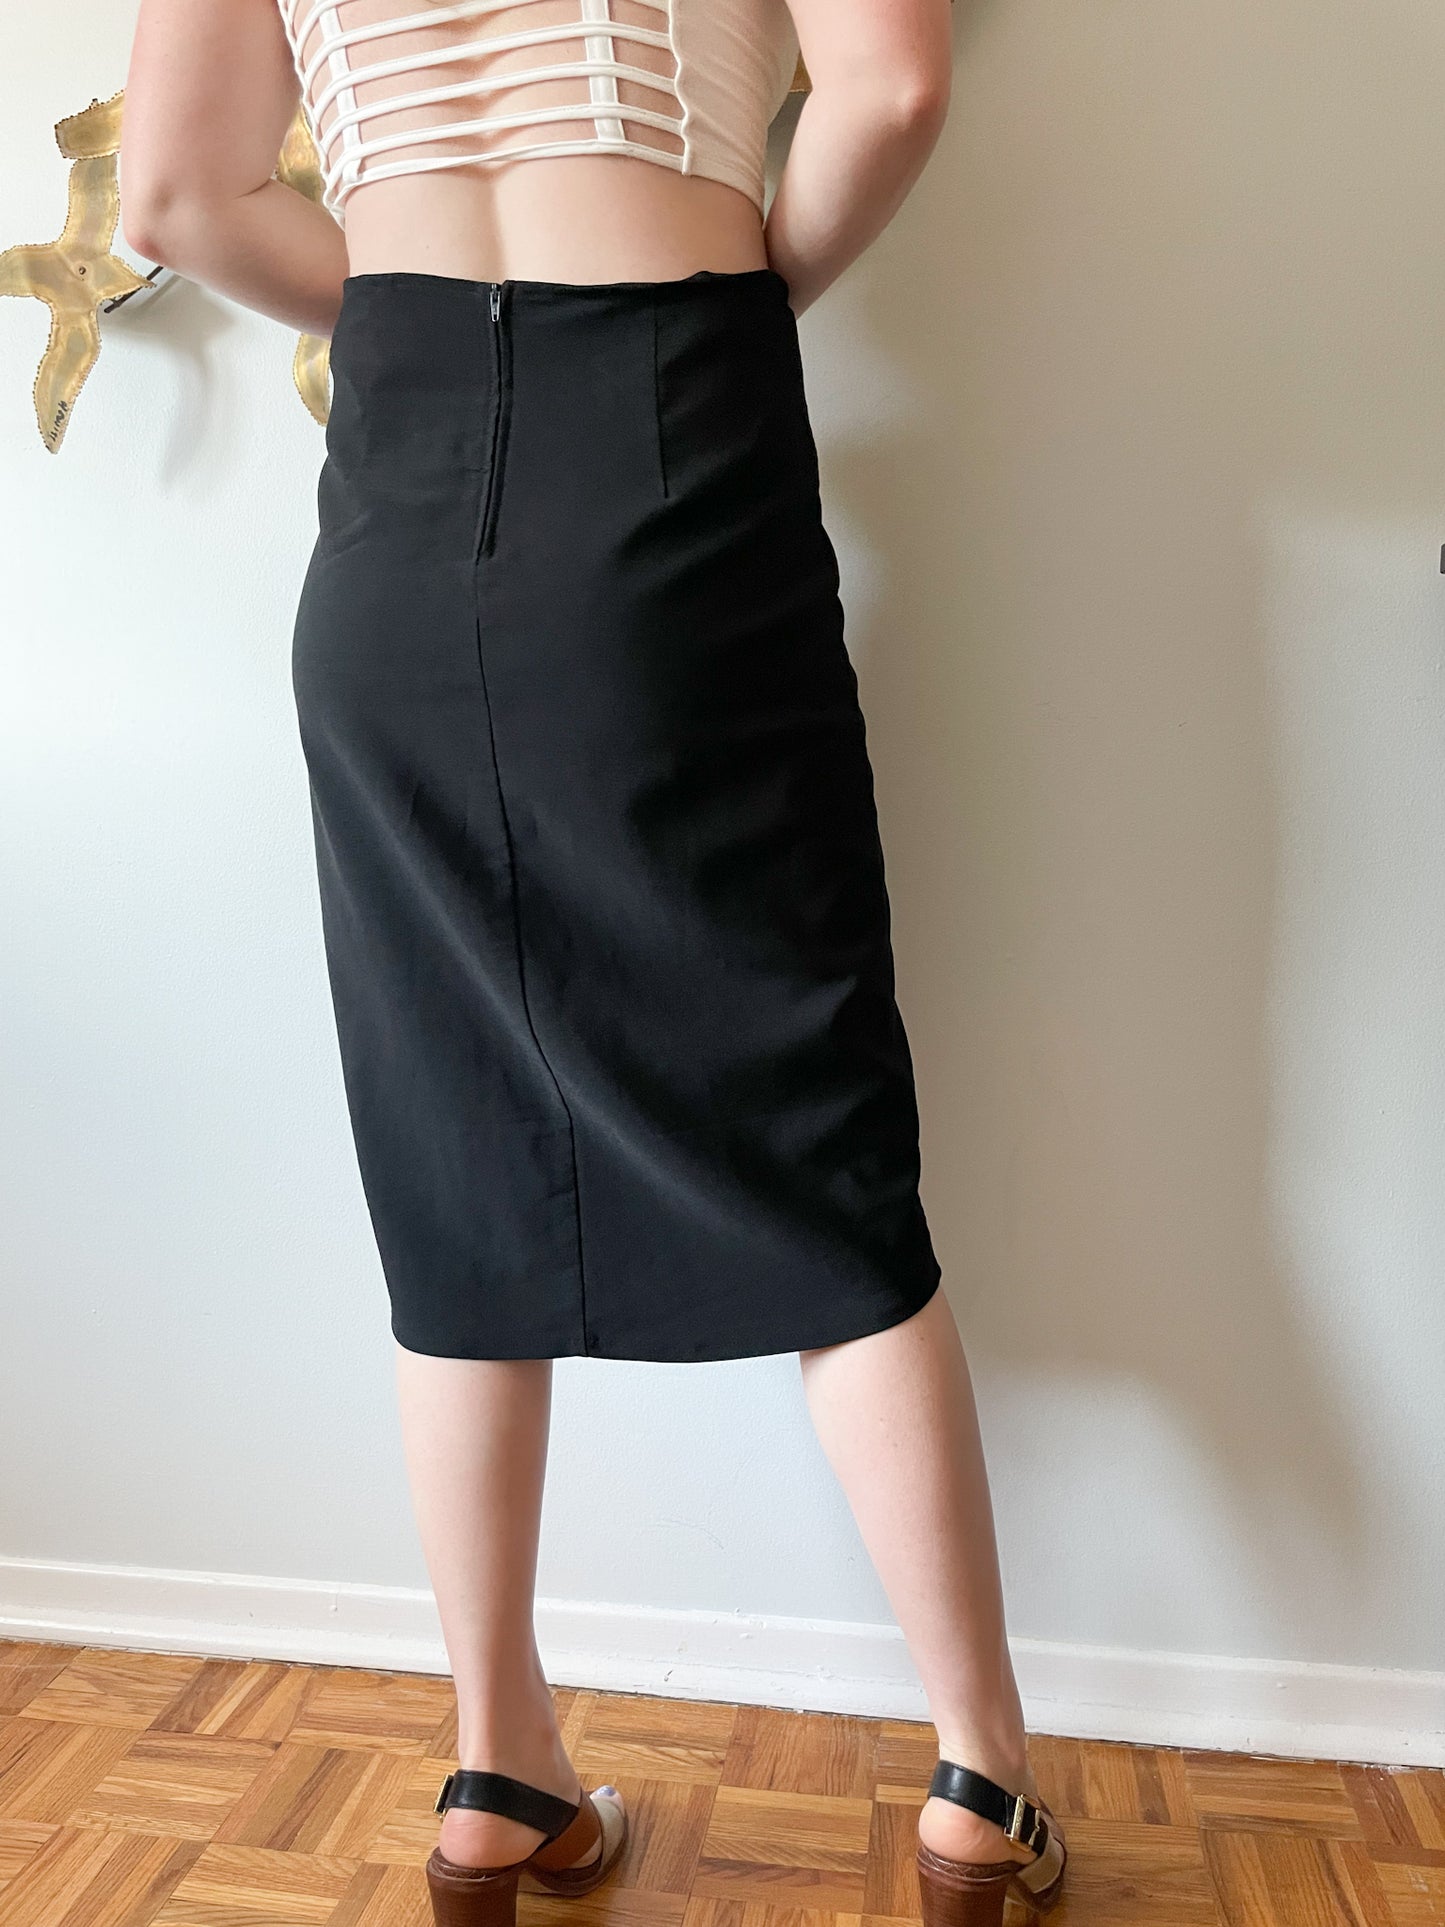 HKR Black Stretch Slit Pencil Skirt - Medium